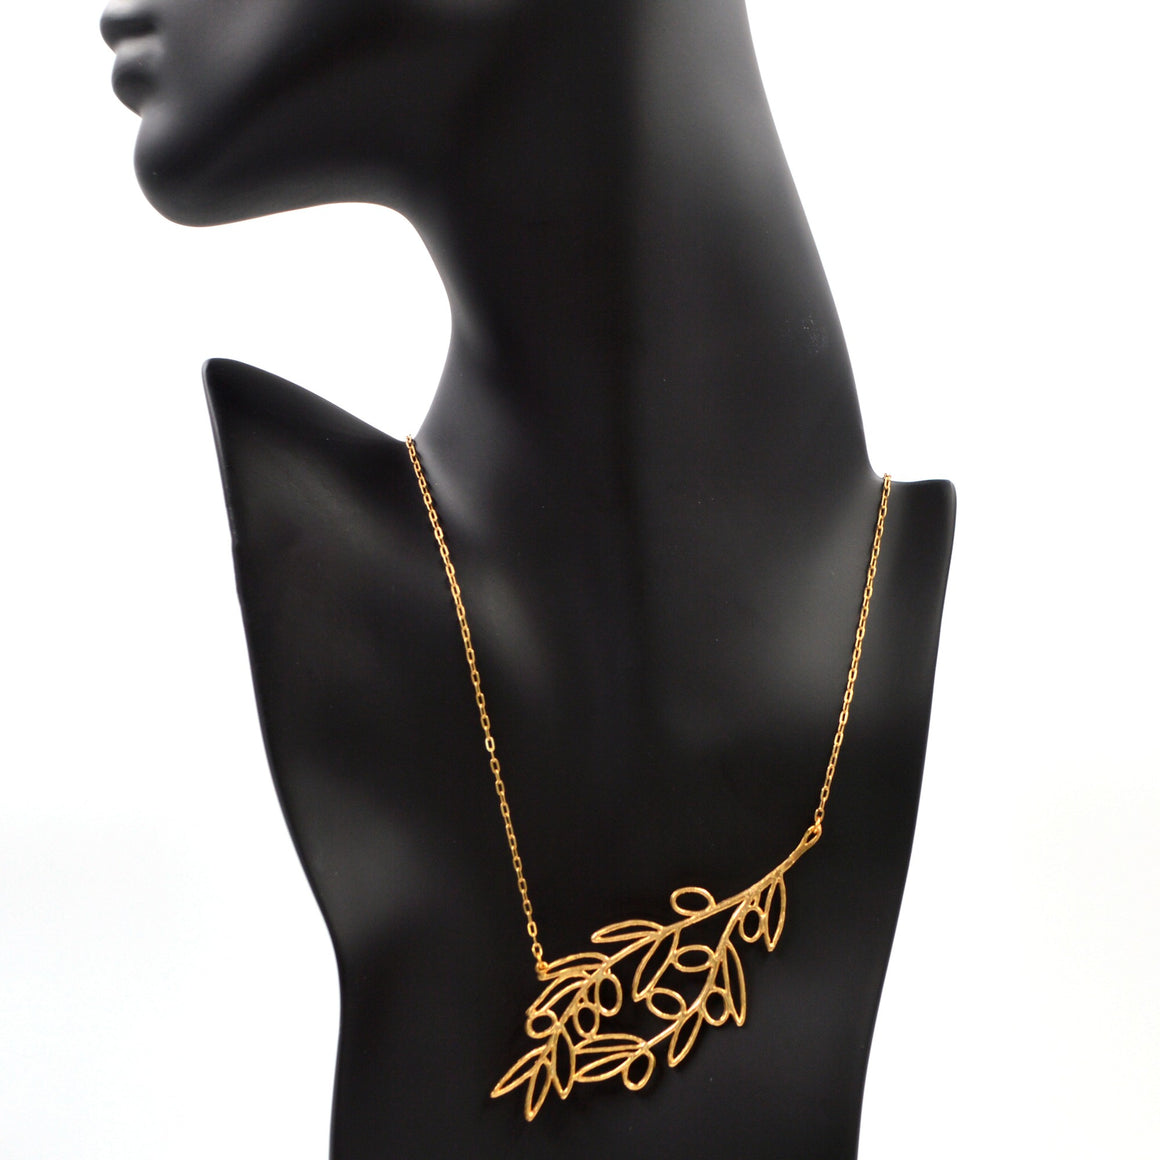 Olive Branch Slanted Collar Necklace - 24K Gold Plated